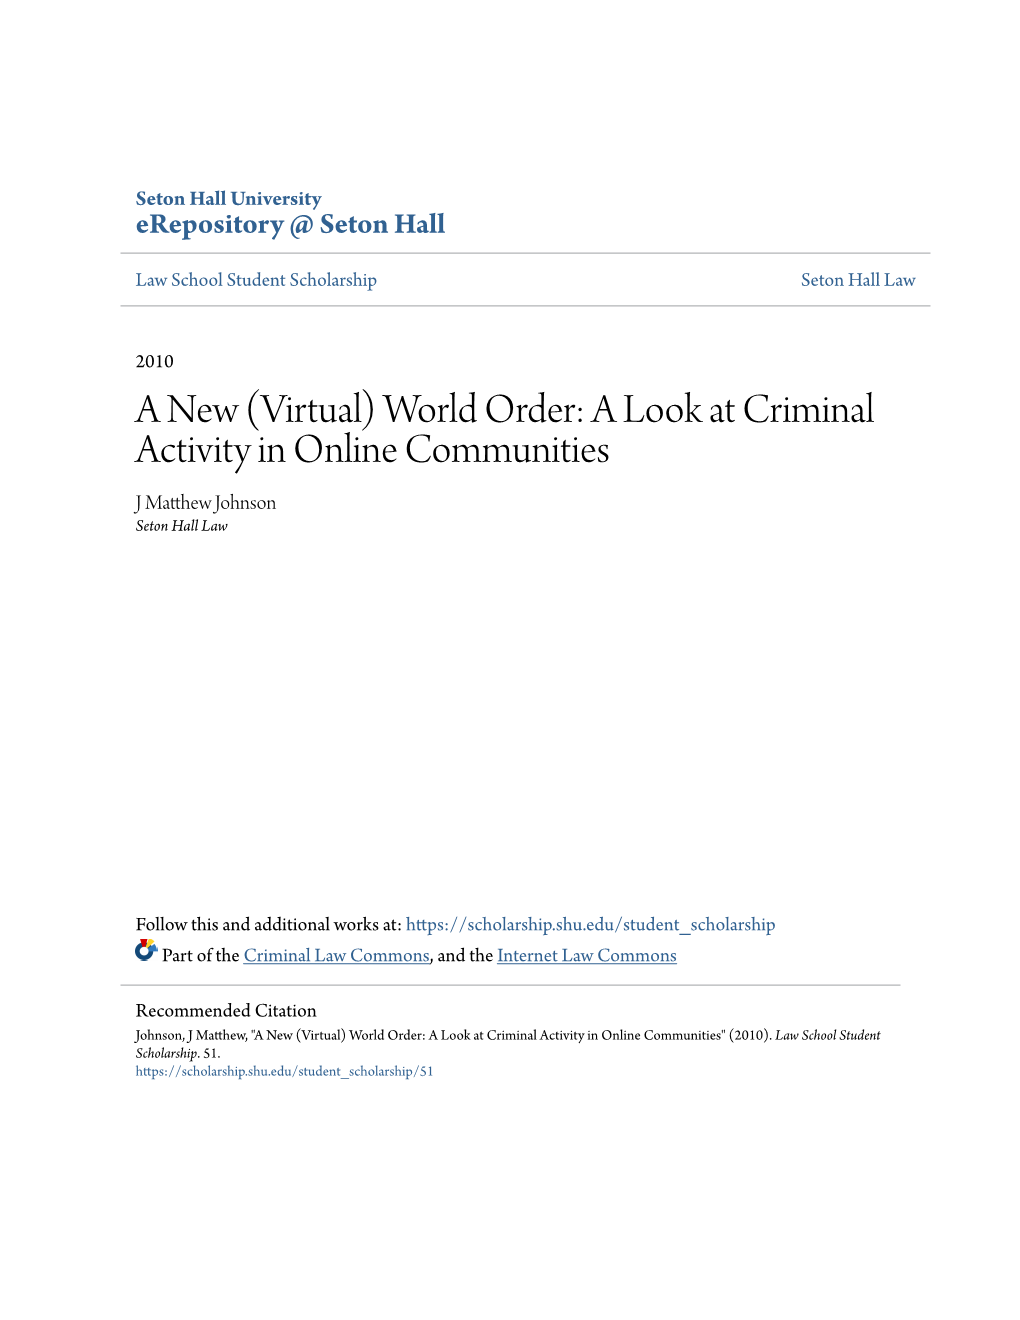 World Order: a Look at Criminal Activity in Online Communities J Matthew Ohnsonj Seton Hall Law